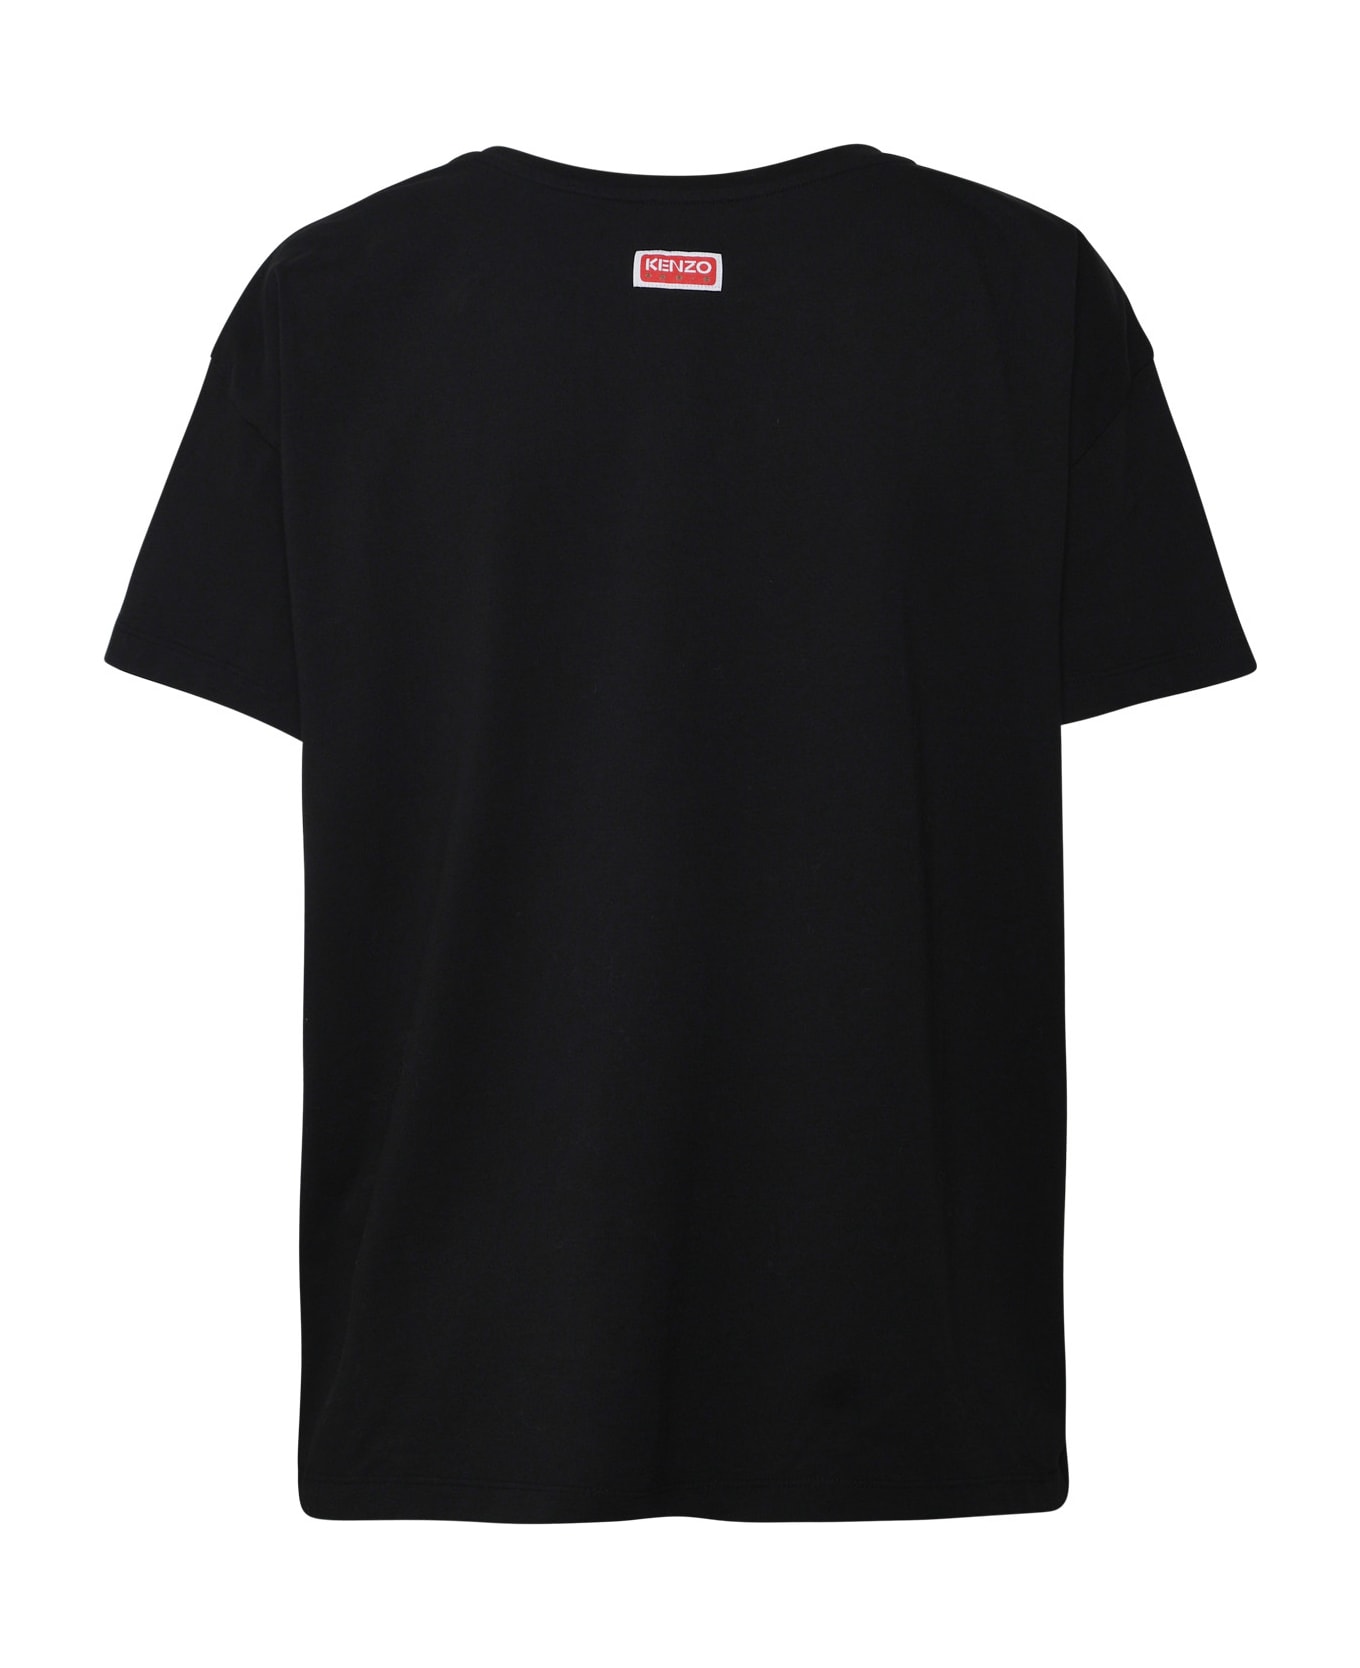 Kenzo Black Cotton T-shirt - Black Tシャツ